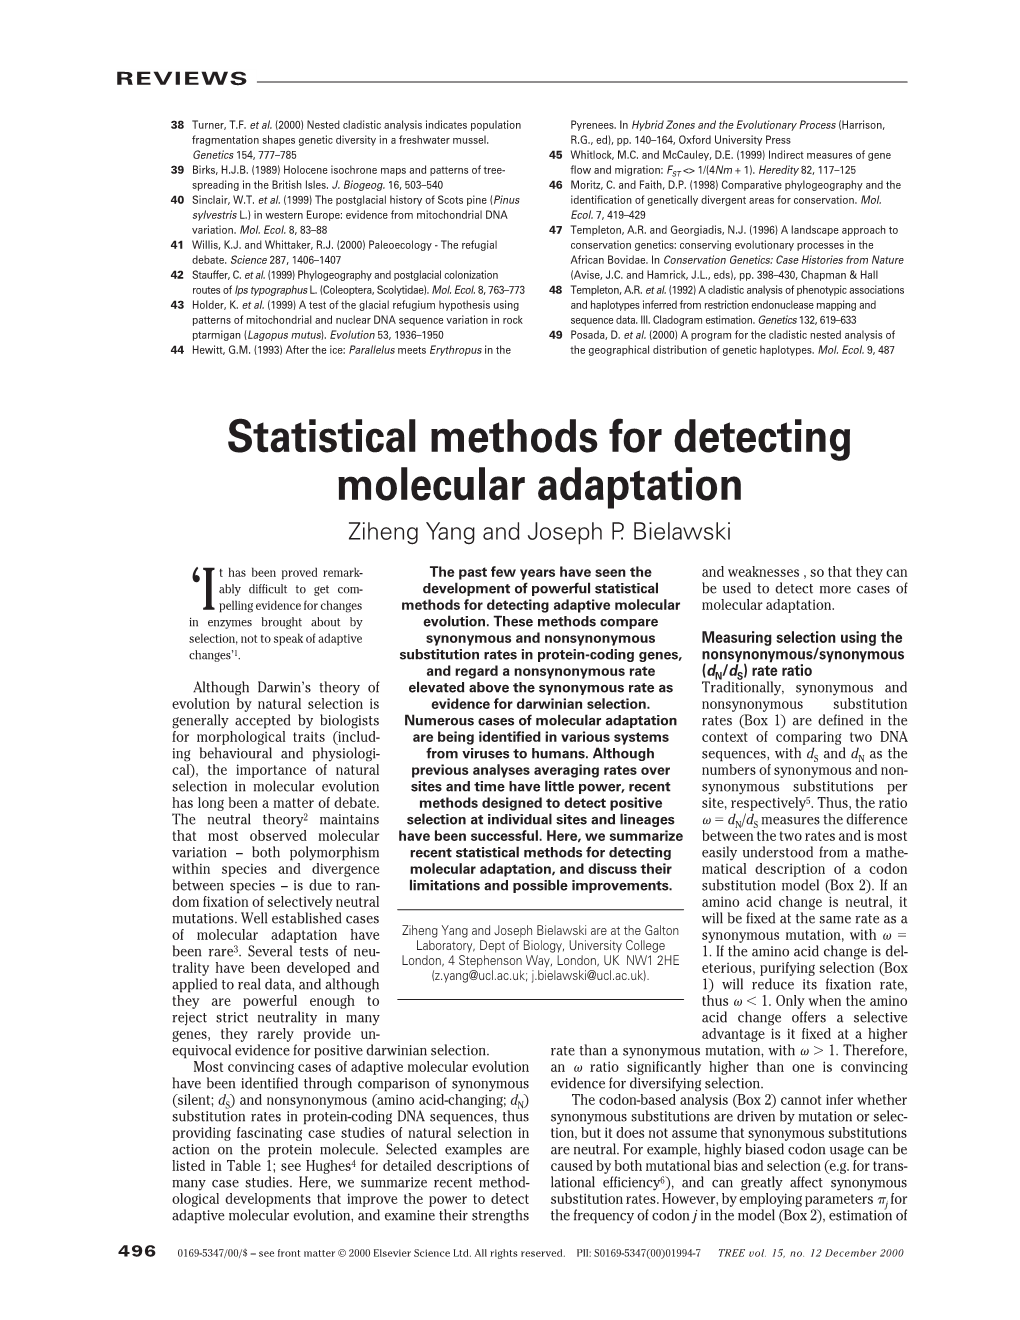 Statistical Methods for Detecting Molecular Adaptation Ziheng Yang and Joseph P